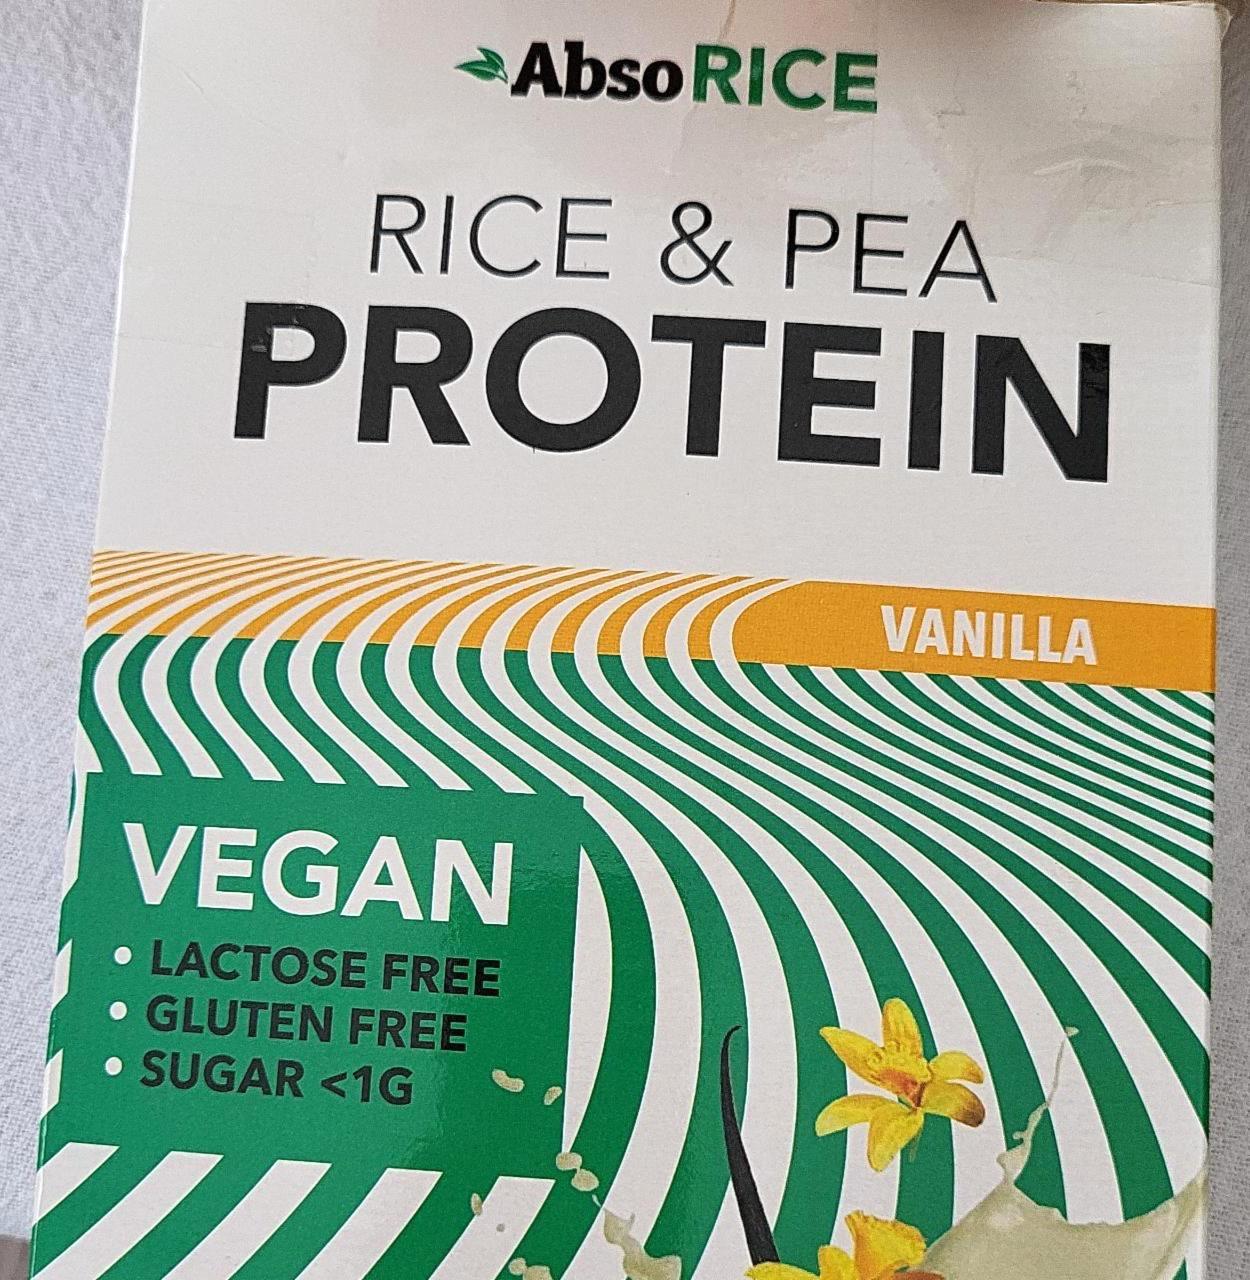 Képek - Rice & pea protein vaniliás AbsoRice